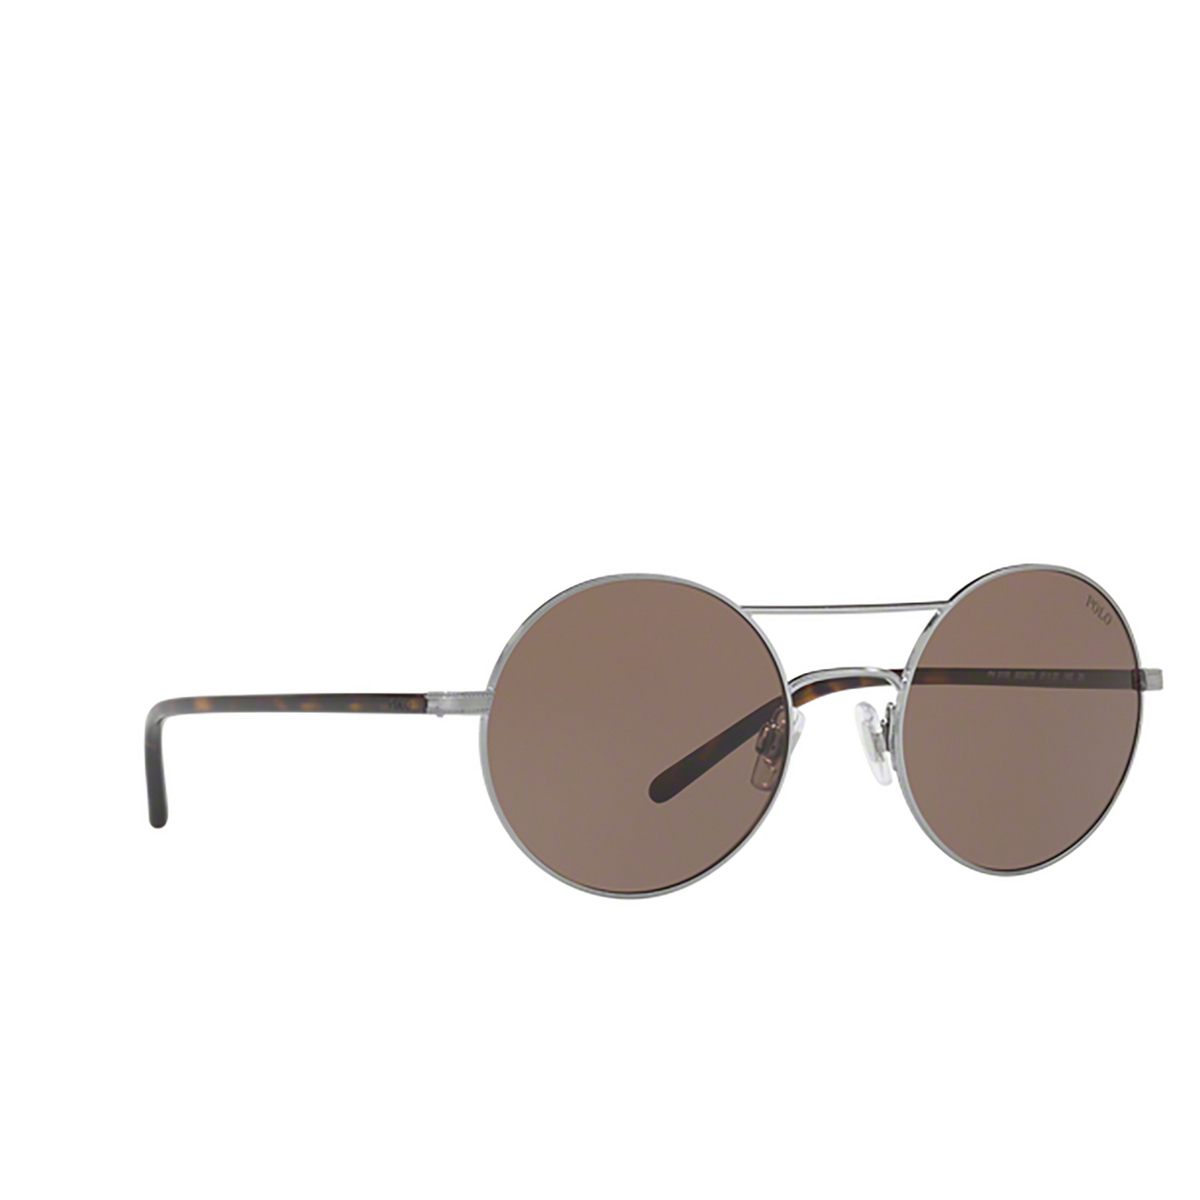 Polo Ralph Lauren® Round Sunglasses: PH3108 color 932873 - three-quarters view.